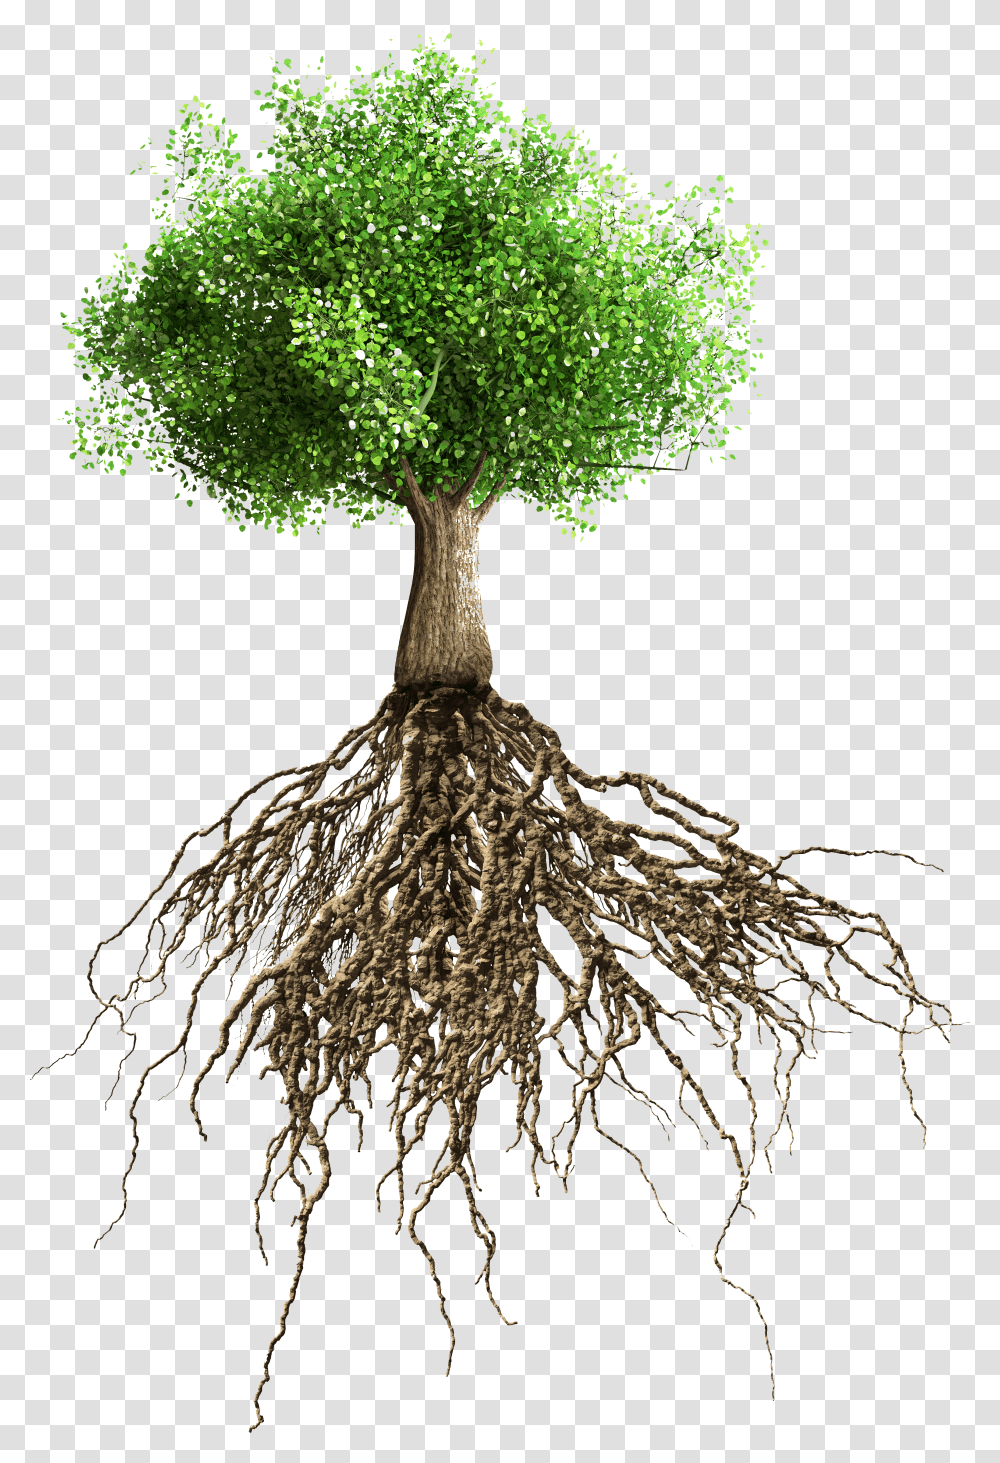 Raices Del Arbol De Mango Tree With Roots Background, Plant, Potted Plant, Vase, Jar Transparent Png